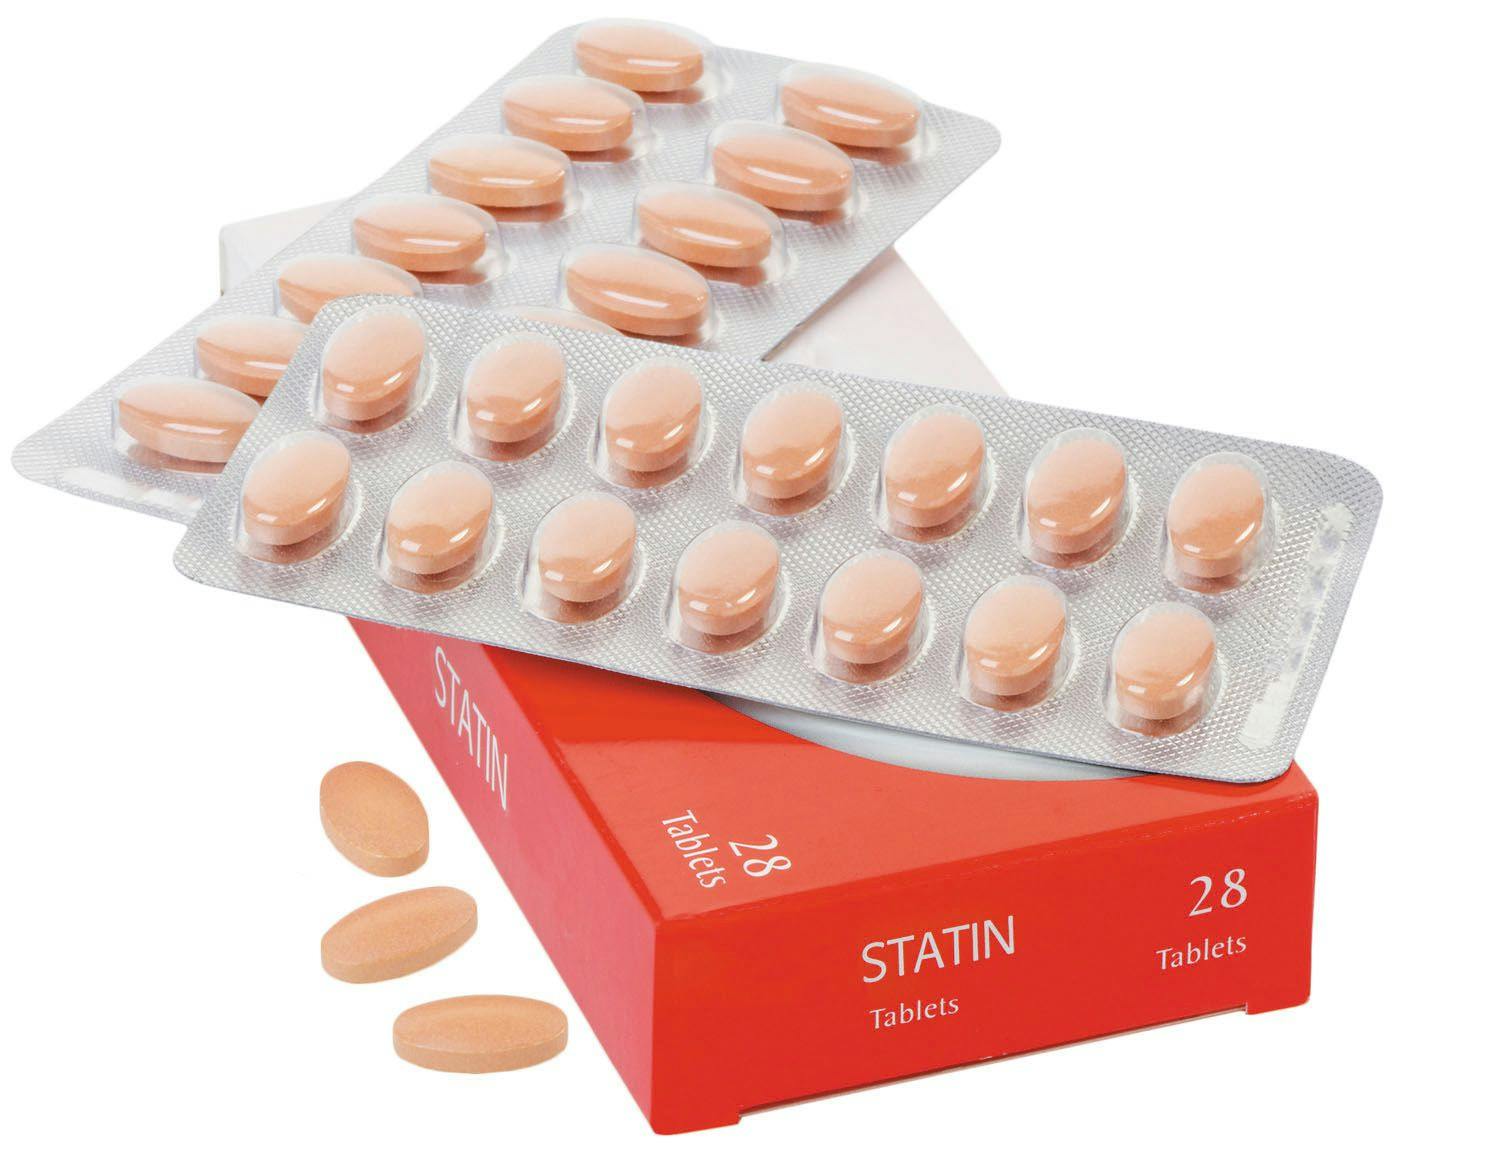 Close up image of statins. | Credit: iStock